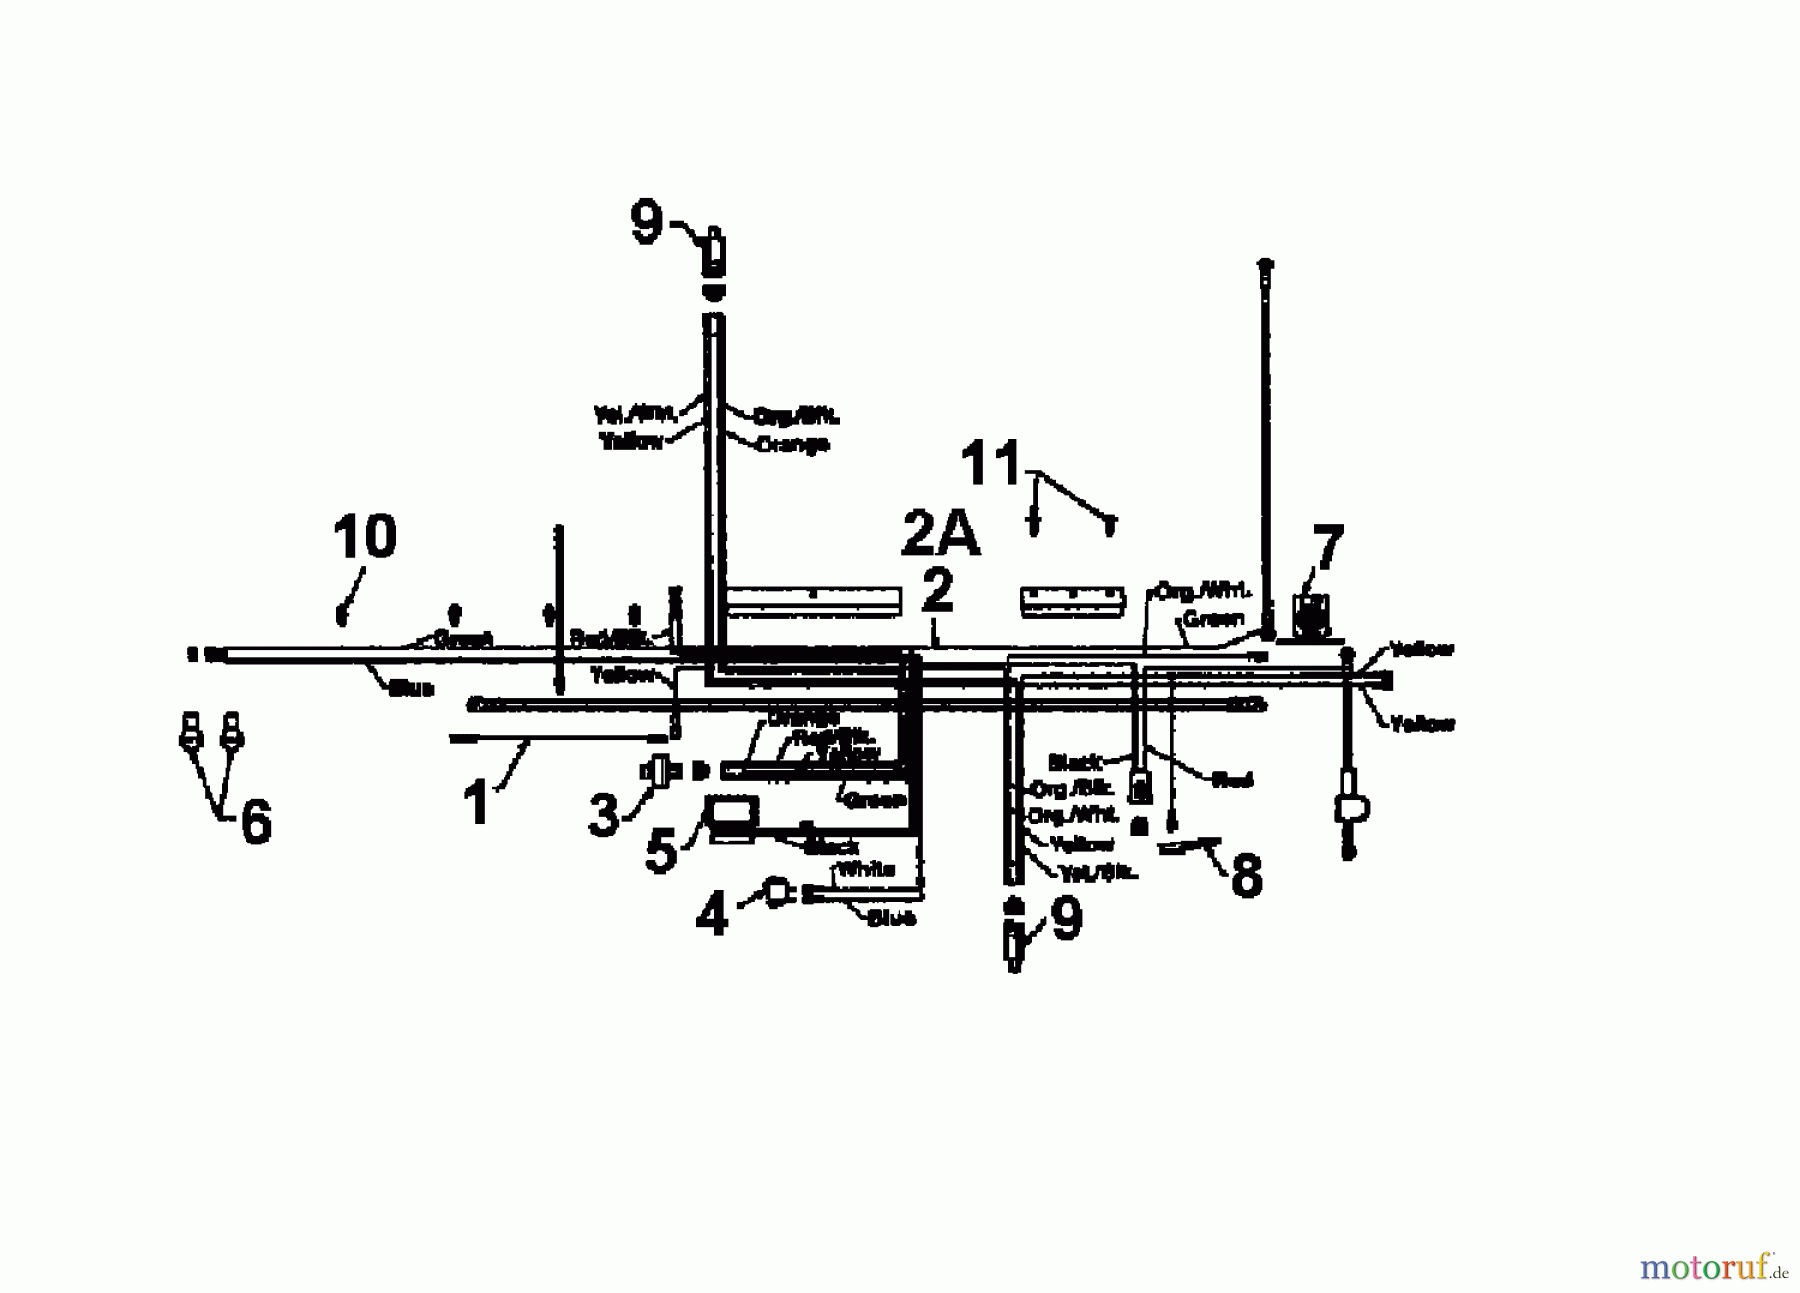  Raiffeisen Lawn tractors RMS 16-107 135T694G628  (1995) Wiring diagram single cylinder